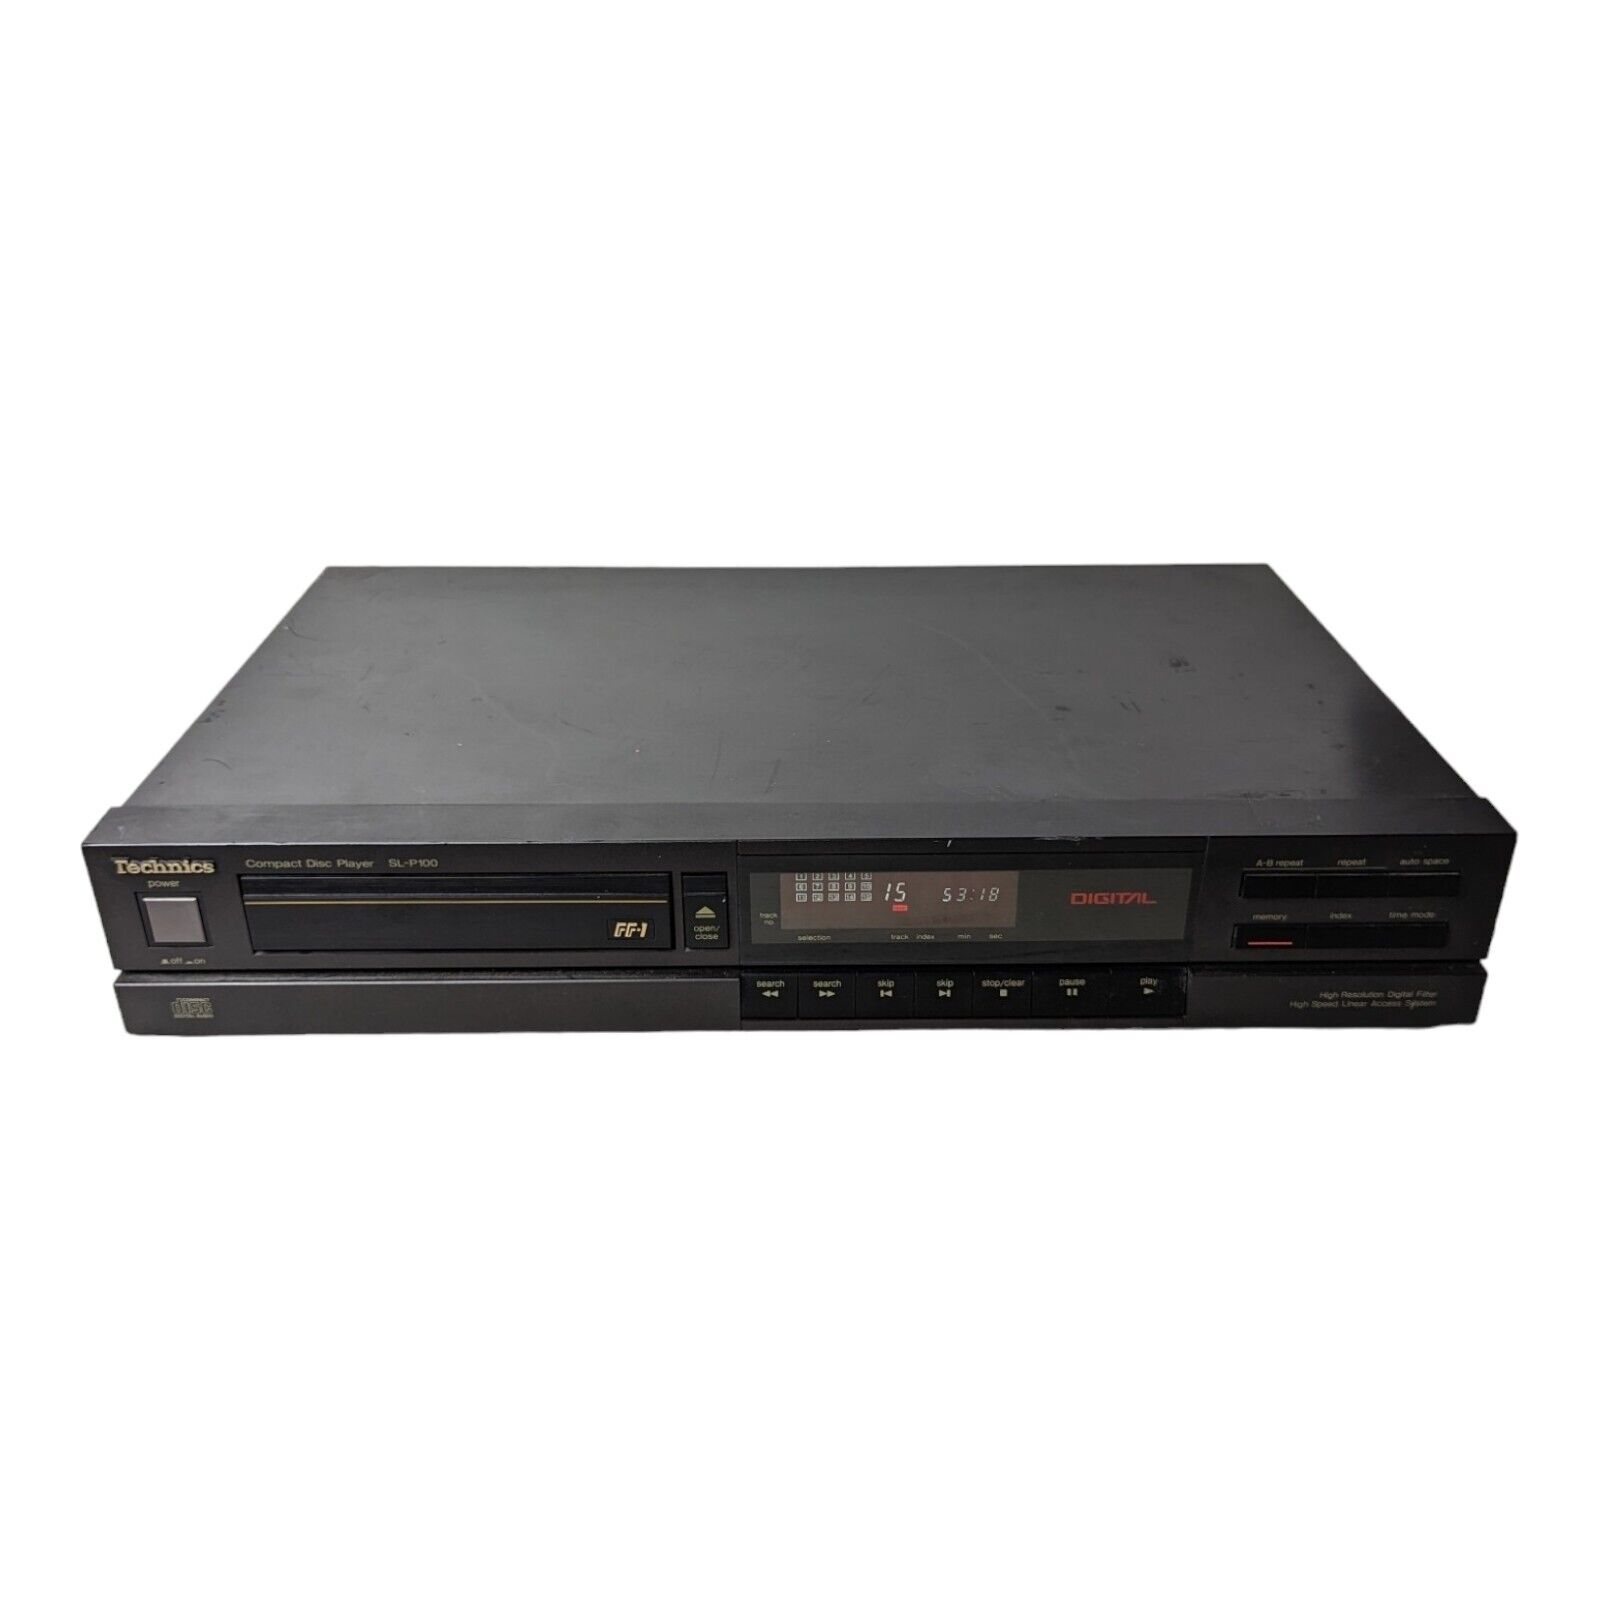 Technics SL-P100 Compact Single Disc CD Player -  No Remote